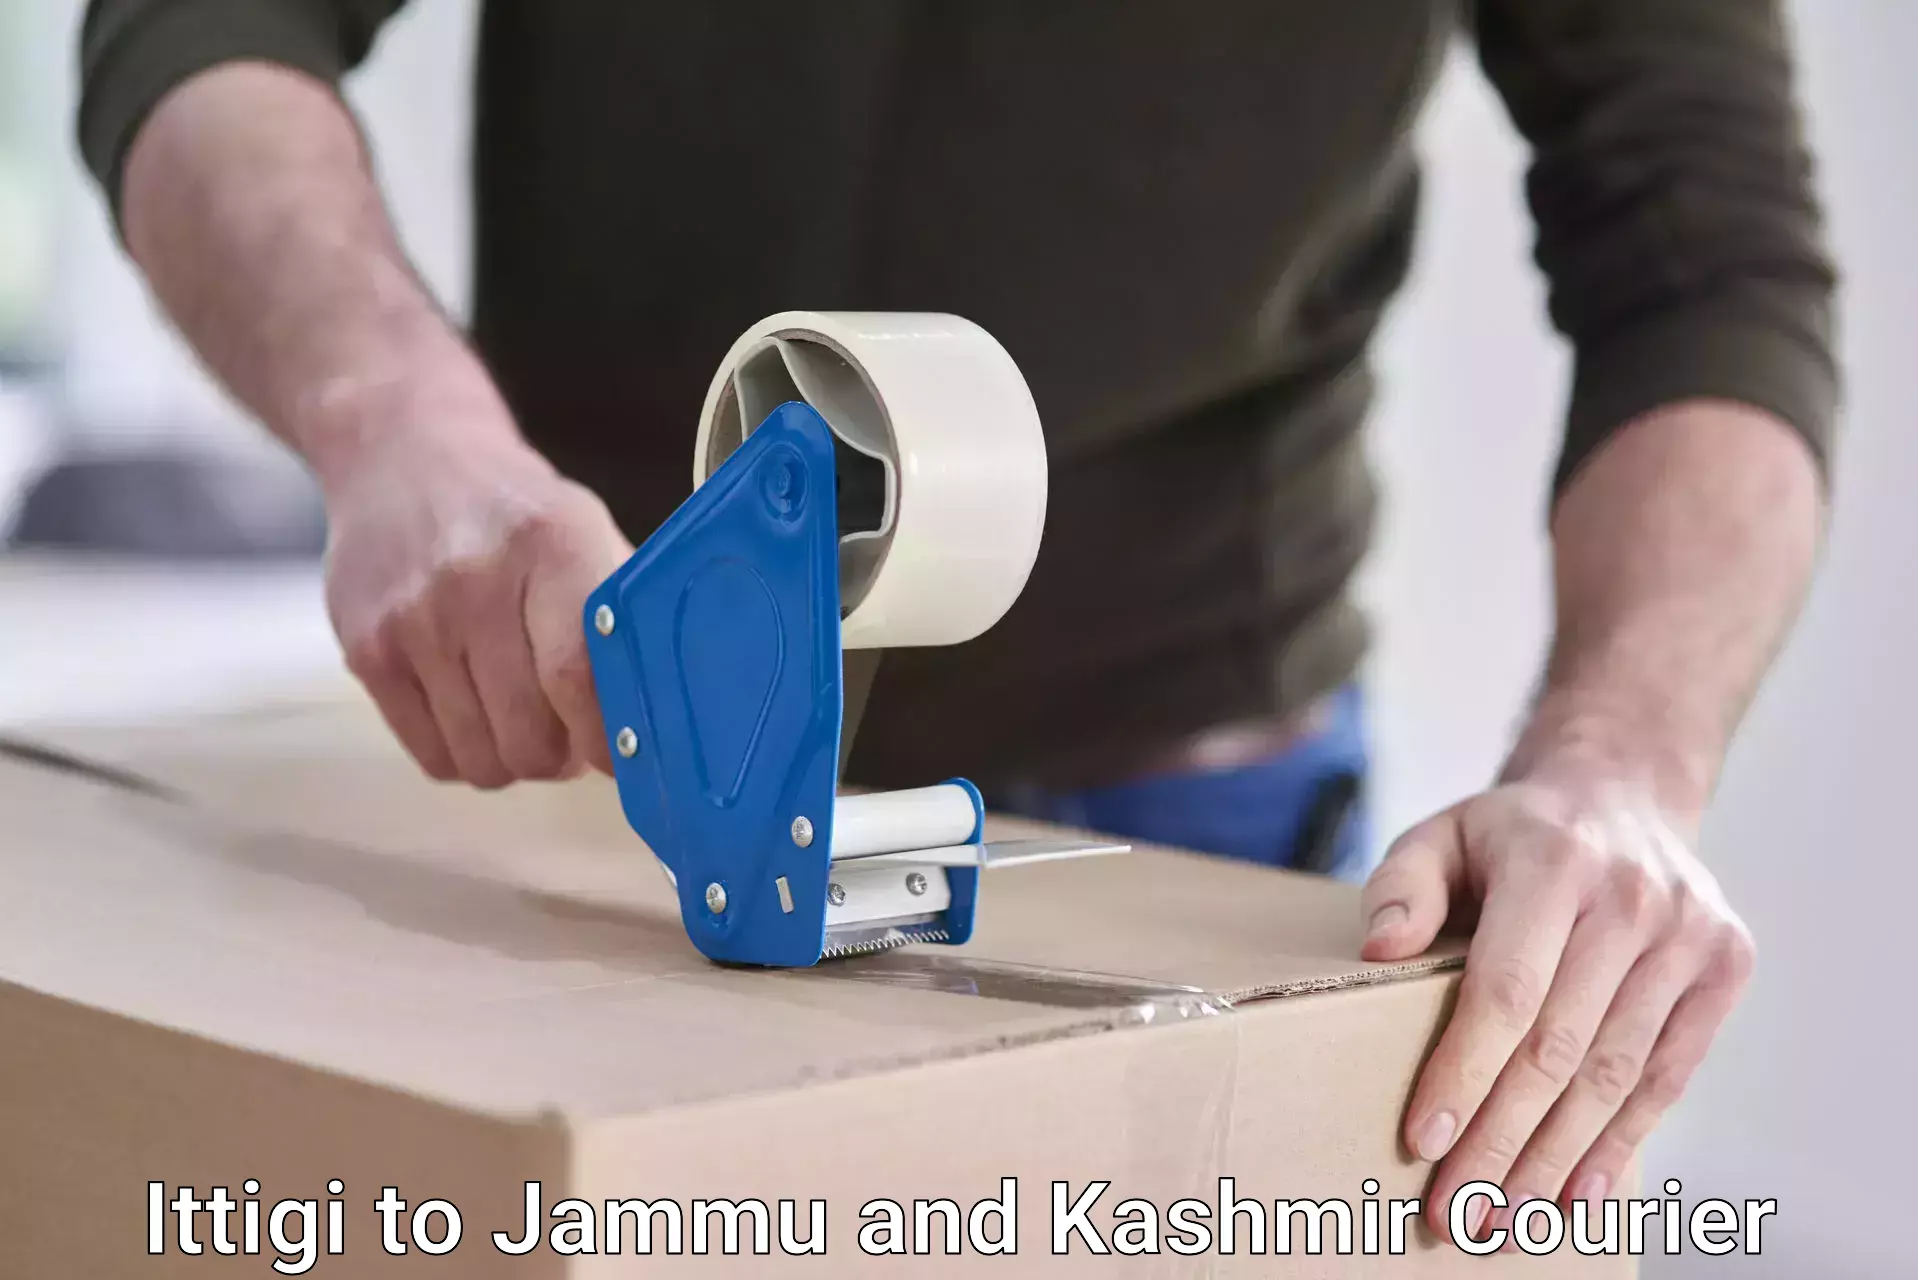 Full-service courier options Ittigi to Jammu and Kashmir